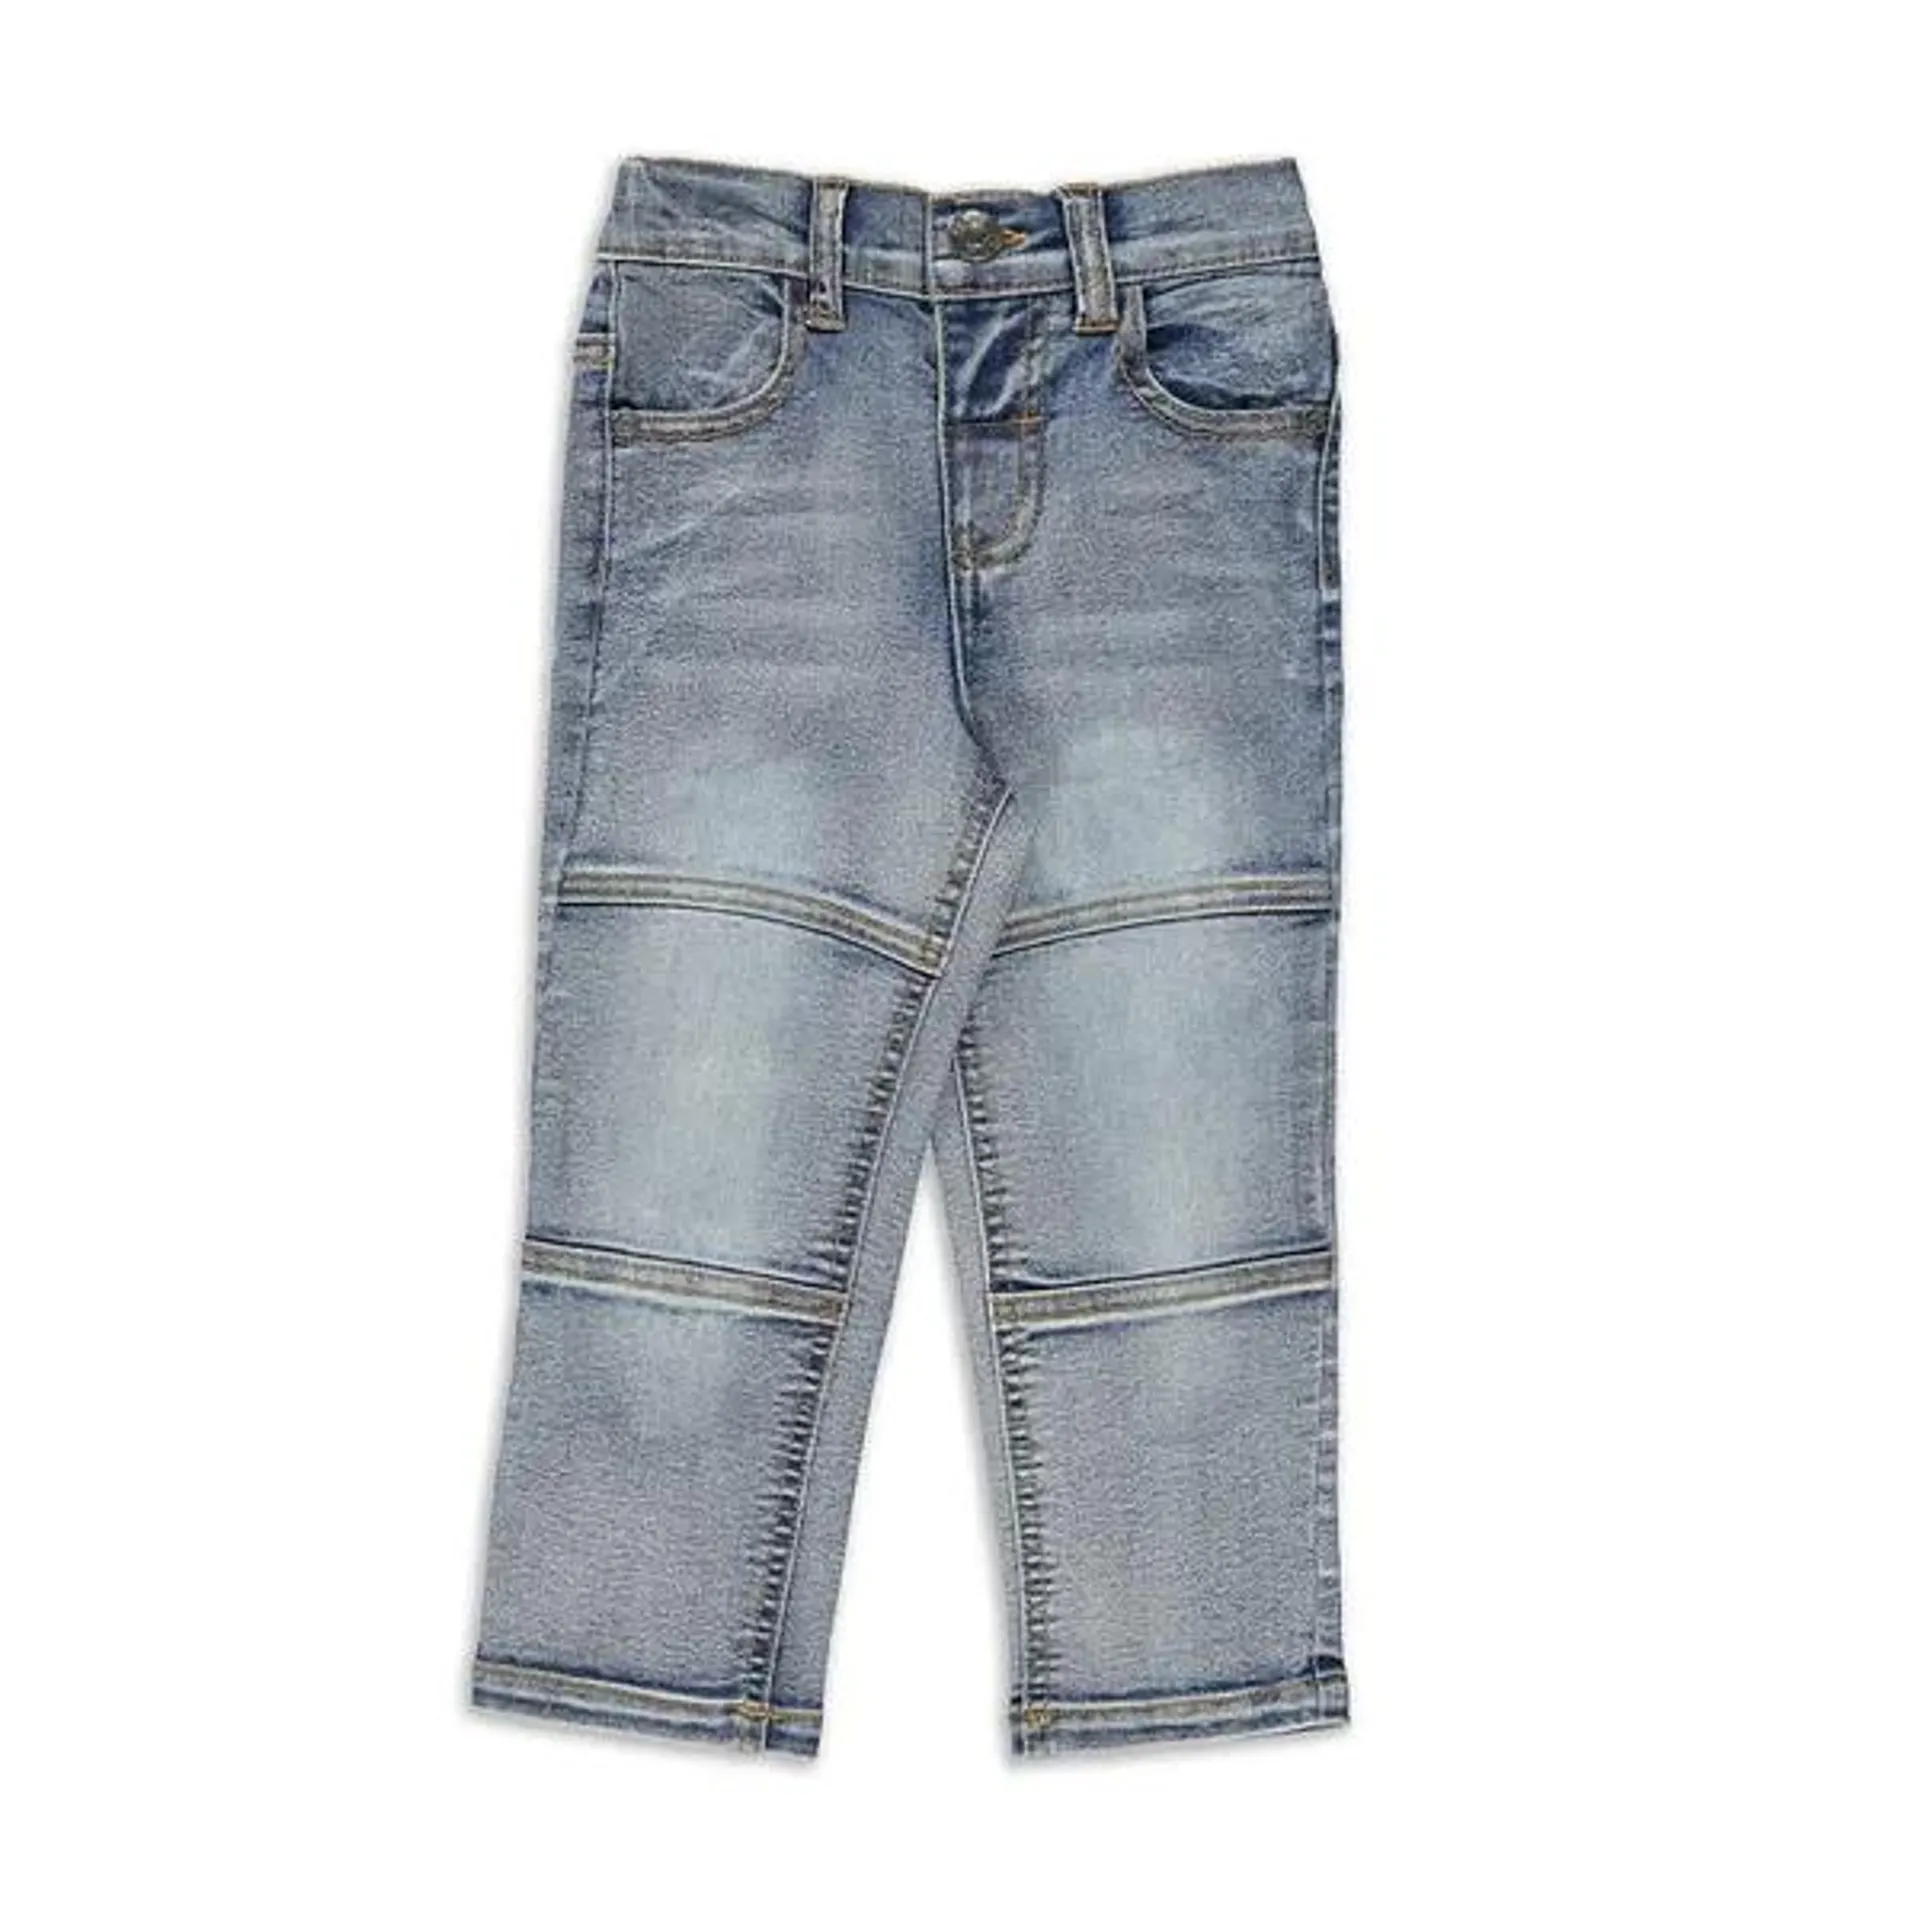 Skinny cropped denim jeans blue